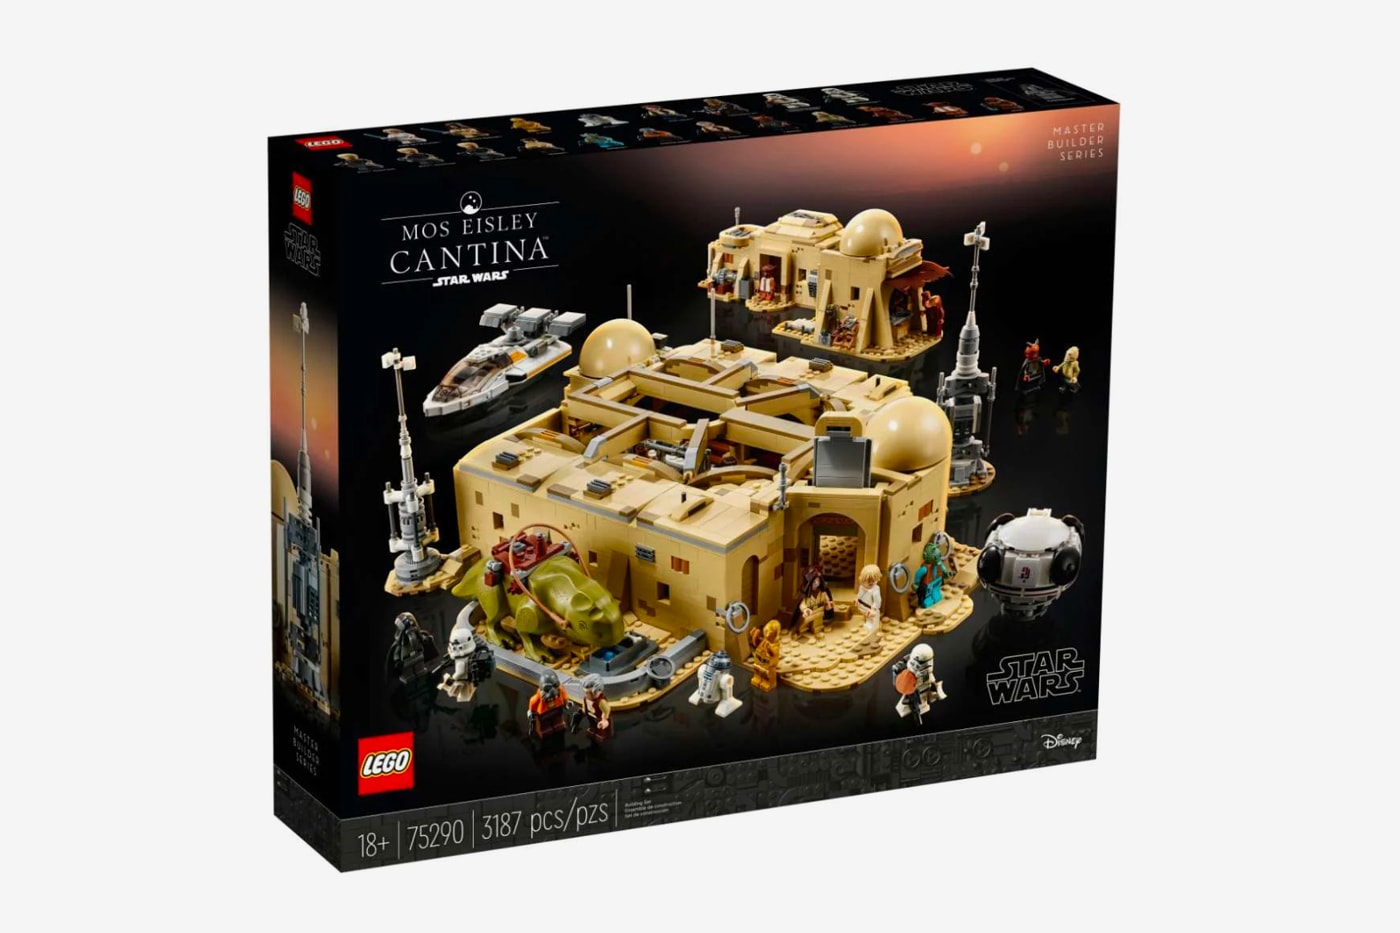 LEGO Star wars Mos Eisley Cantina set announcement news Luke Skywalker Light Saber Lucasfilms A New Hope C-3P0 Han Solo Ponda Baba Greedo